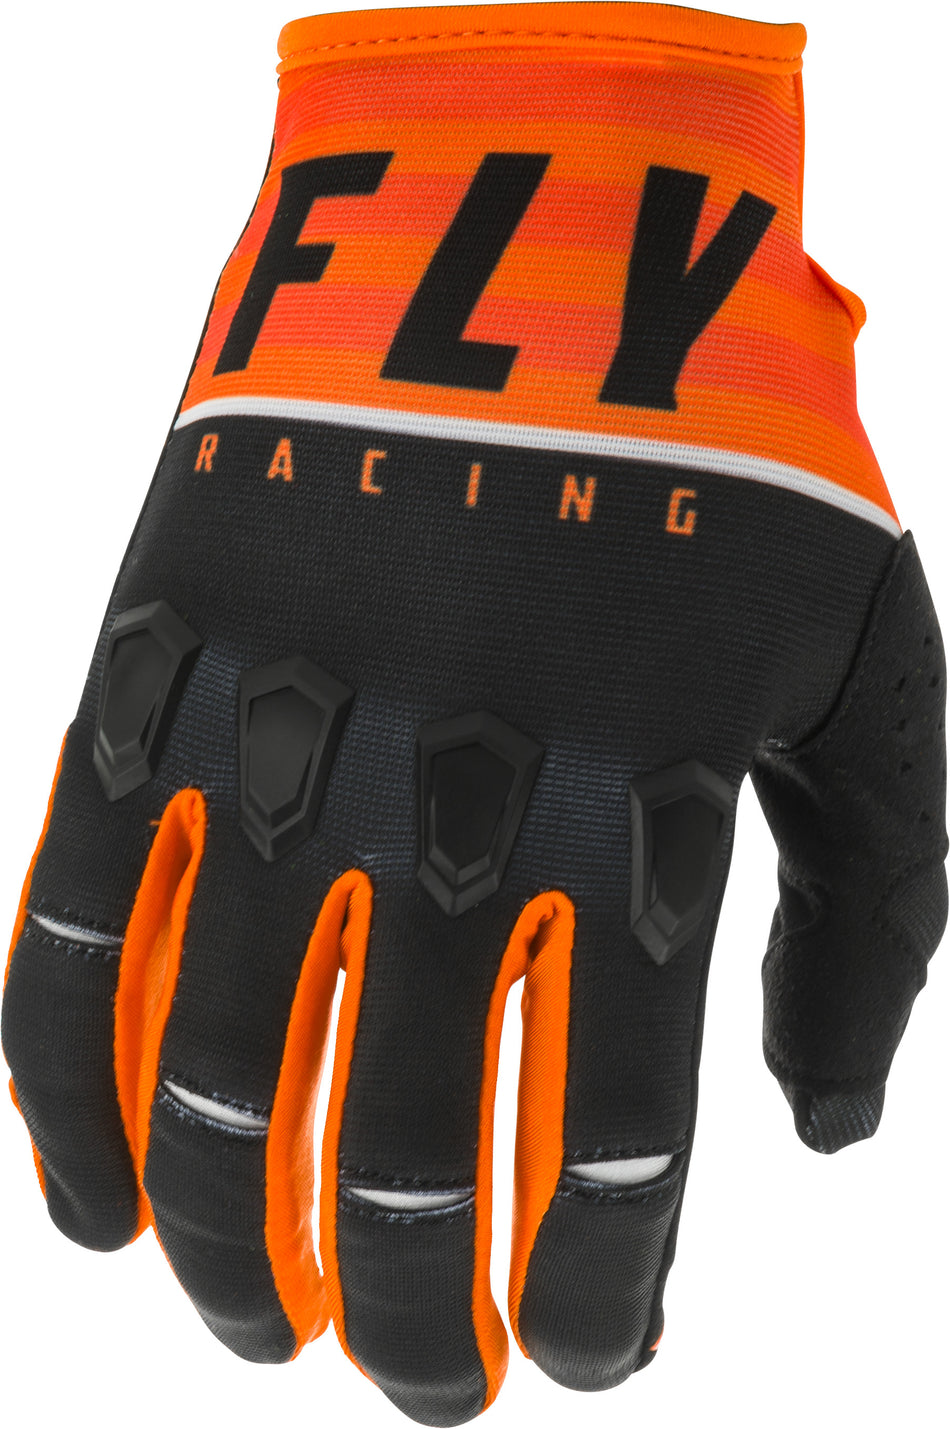 FLY RACING Kinetic K120 Gloves Orange/Black/White Sz 04 373-41704